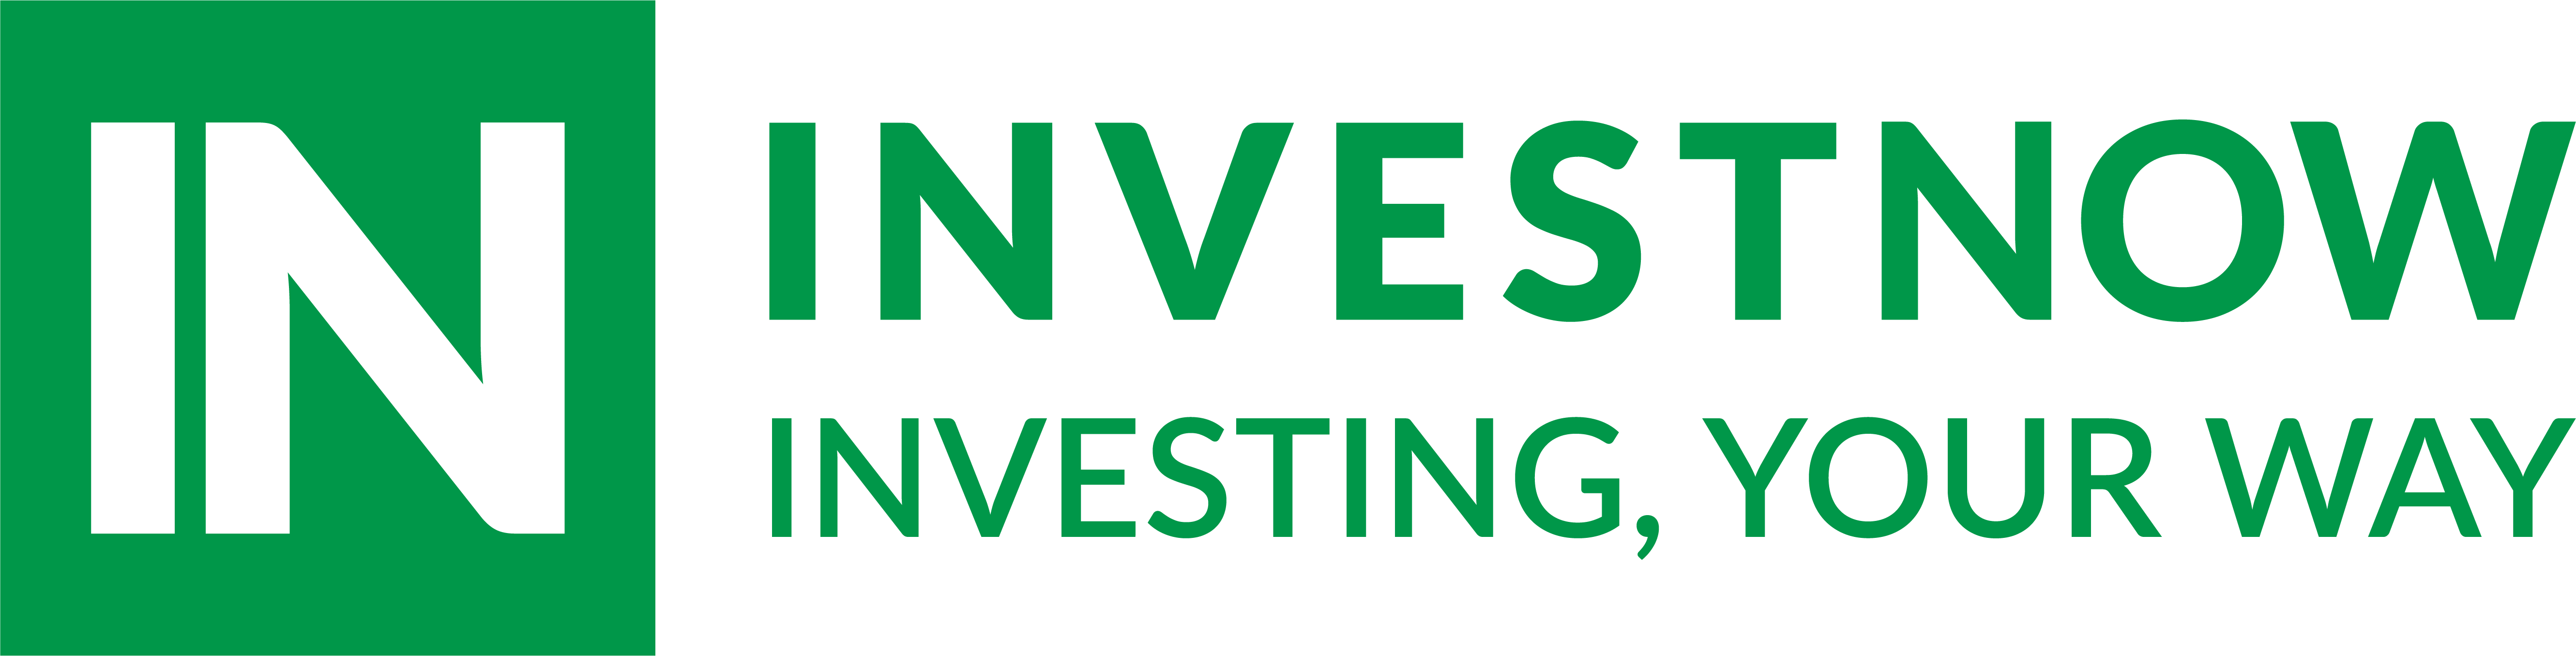 Invest now logo